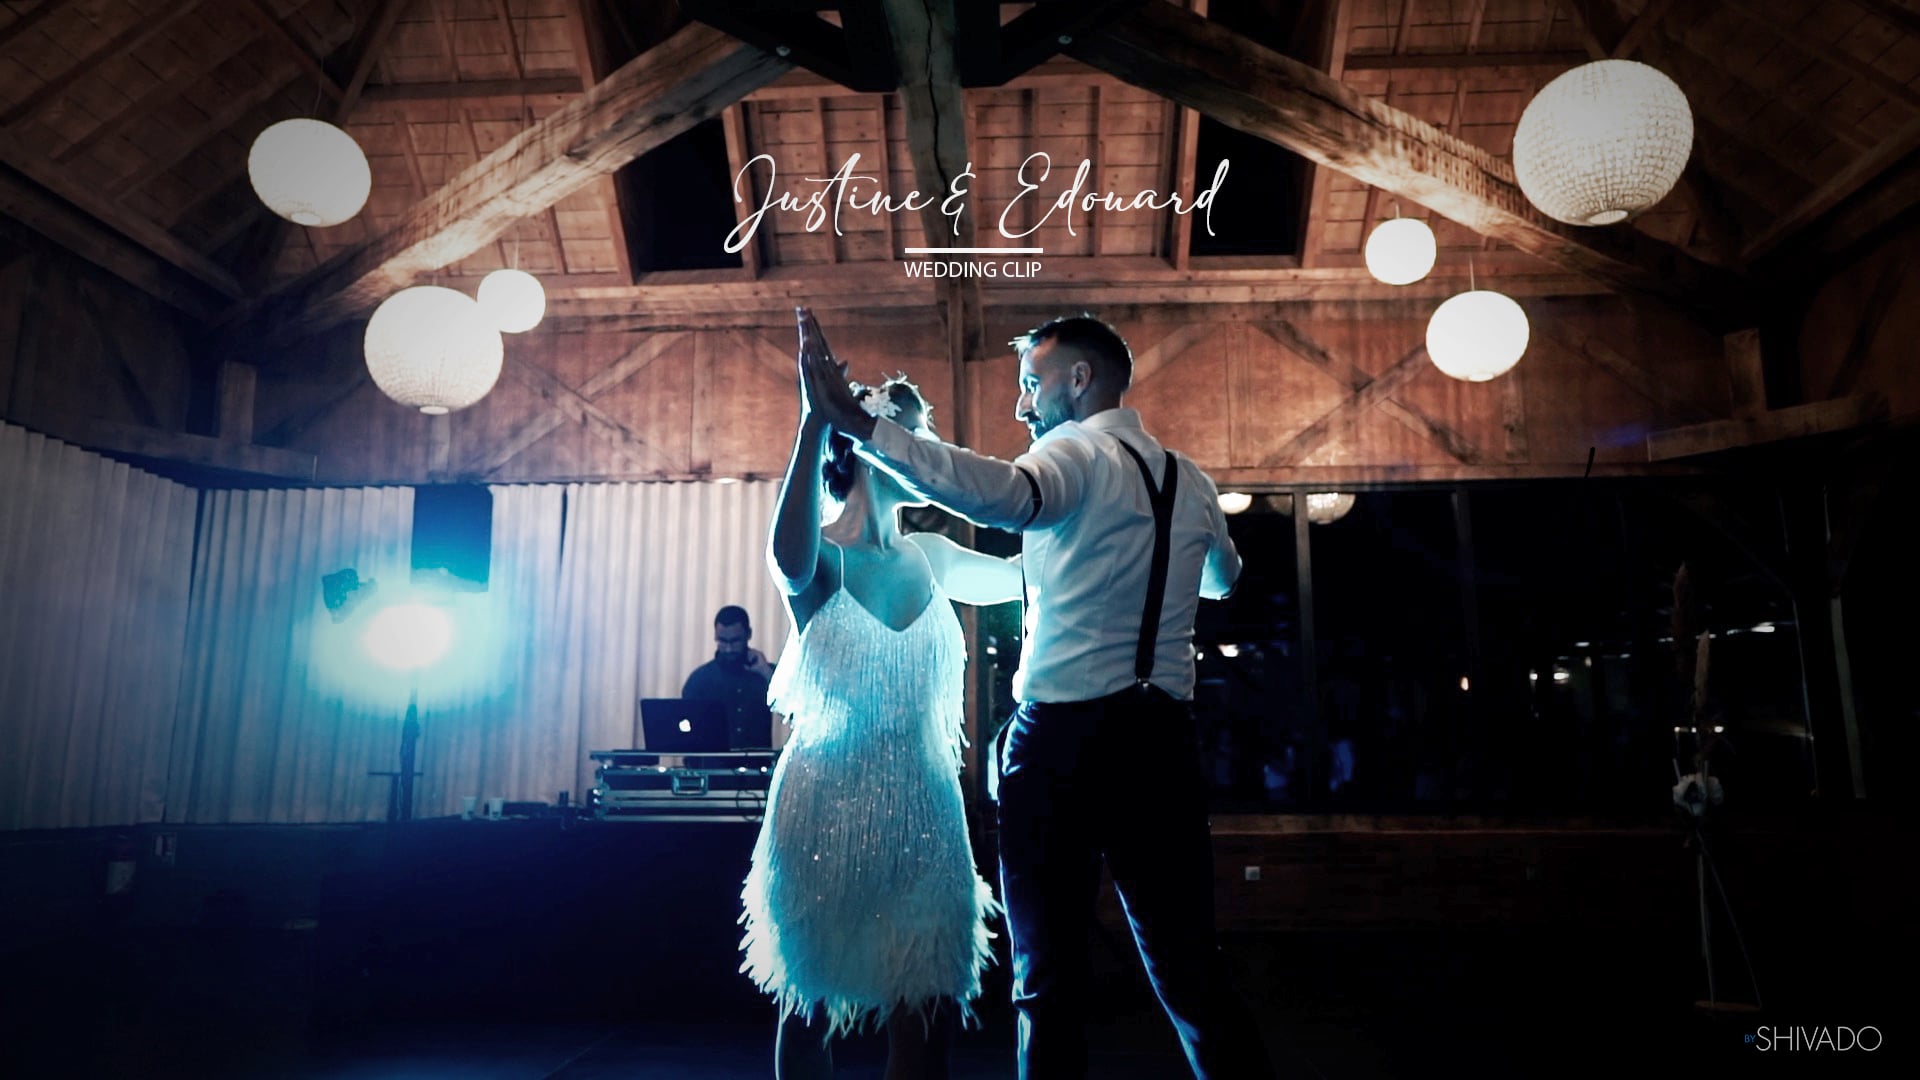 Wedding clip - Justine & Edouard - Sept 2022.mp4